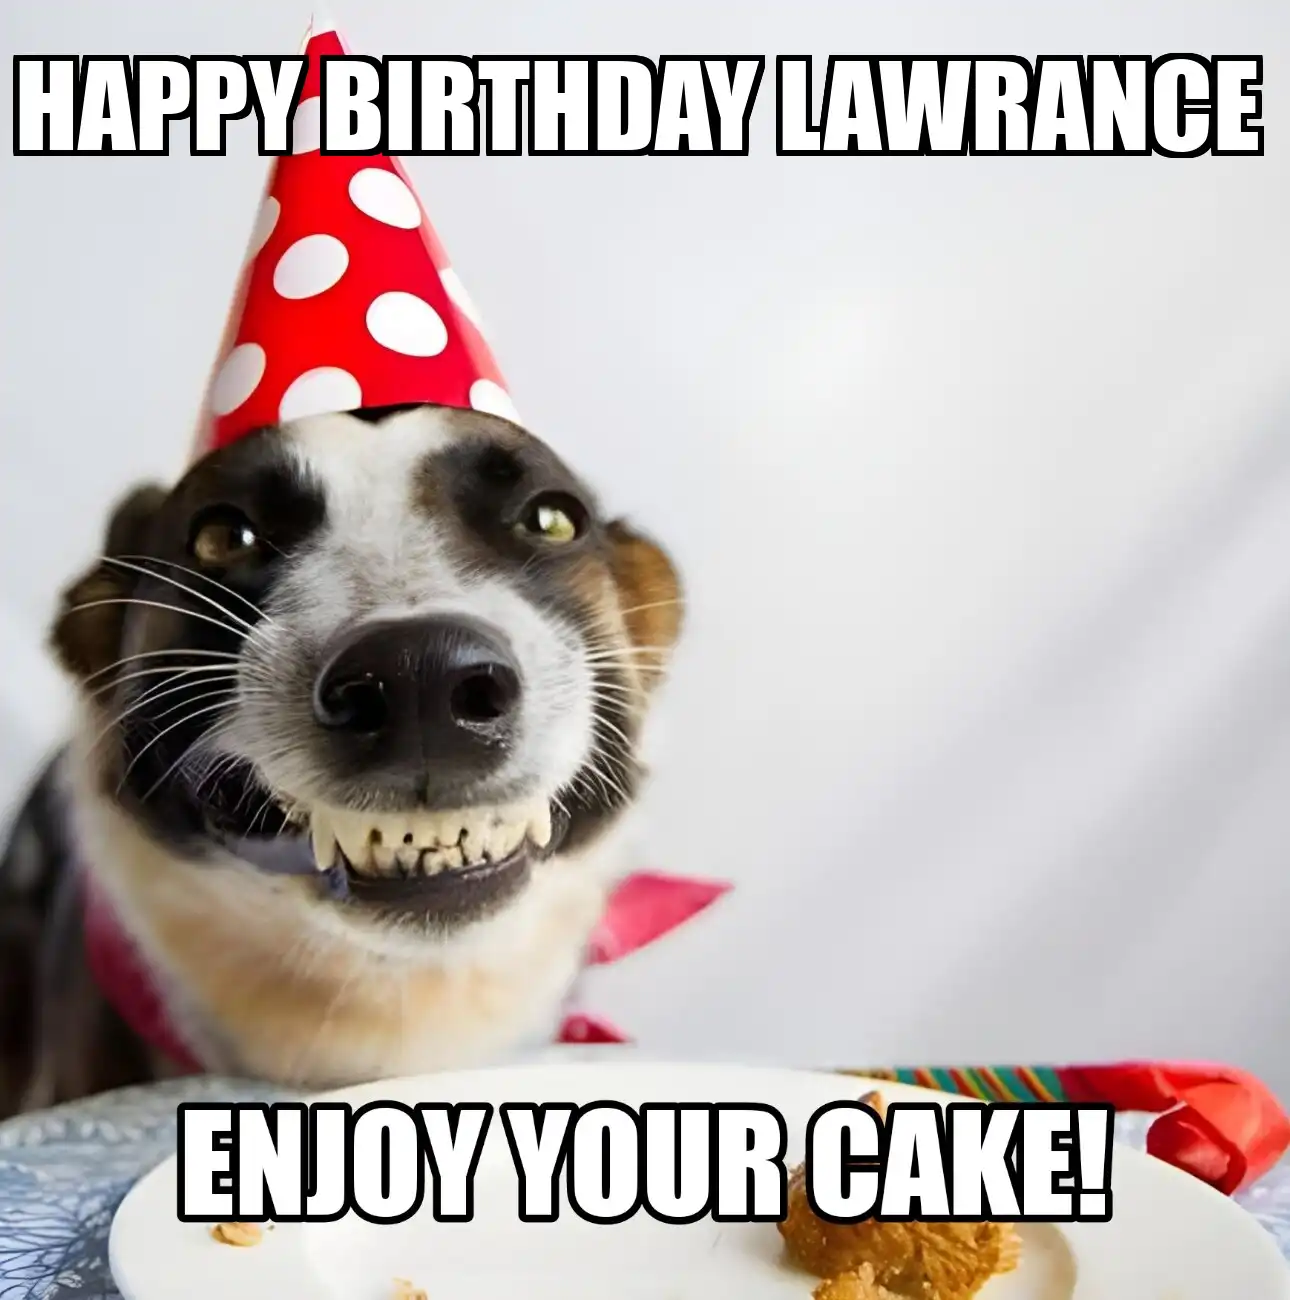 Happy Birthday Lawrance Enjoy Your Cake Dog Meme